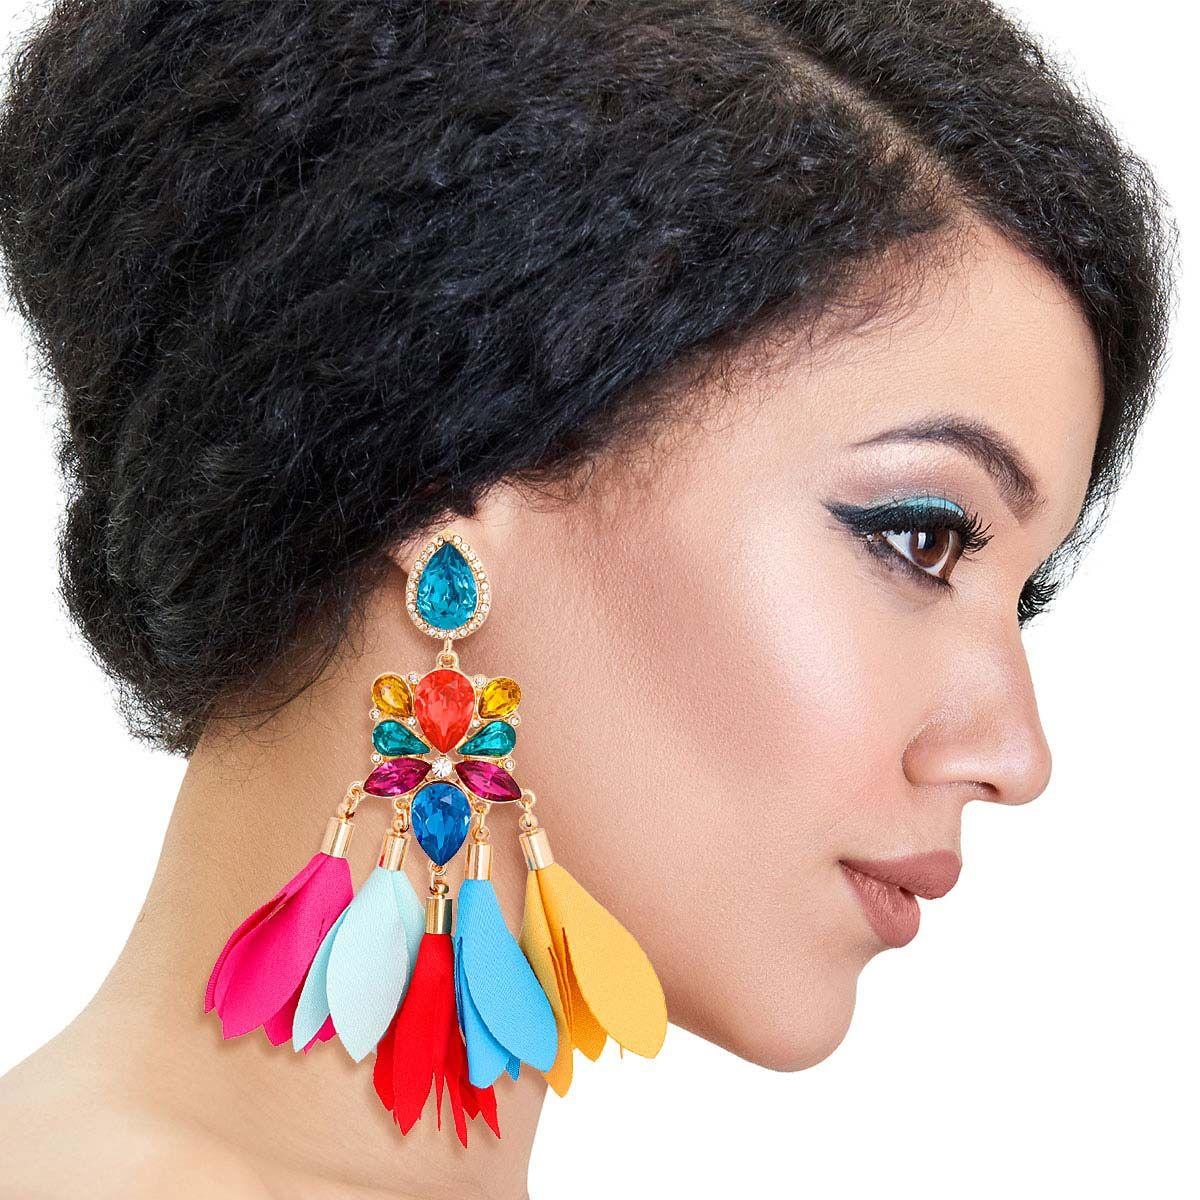 Shop Stunning Multicolor Teardrop Flower Earrings - Perfect Accessory!